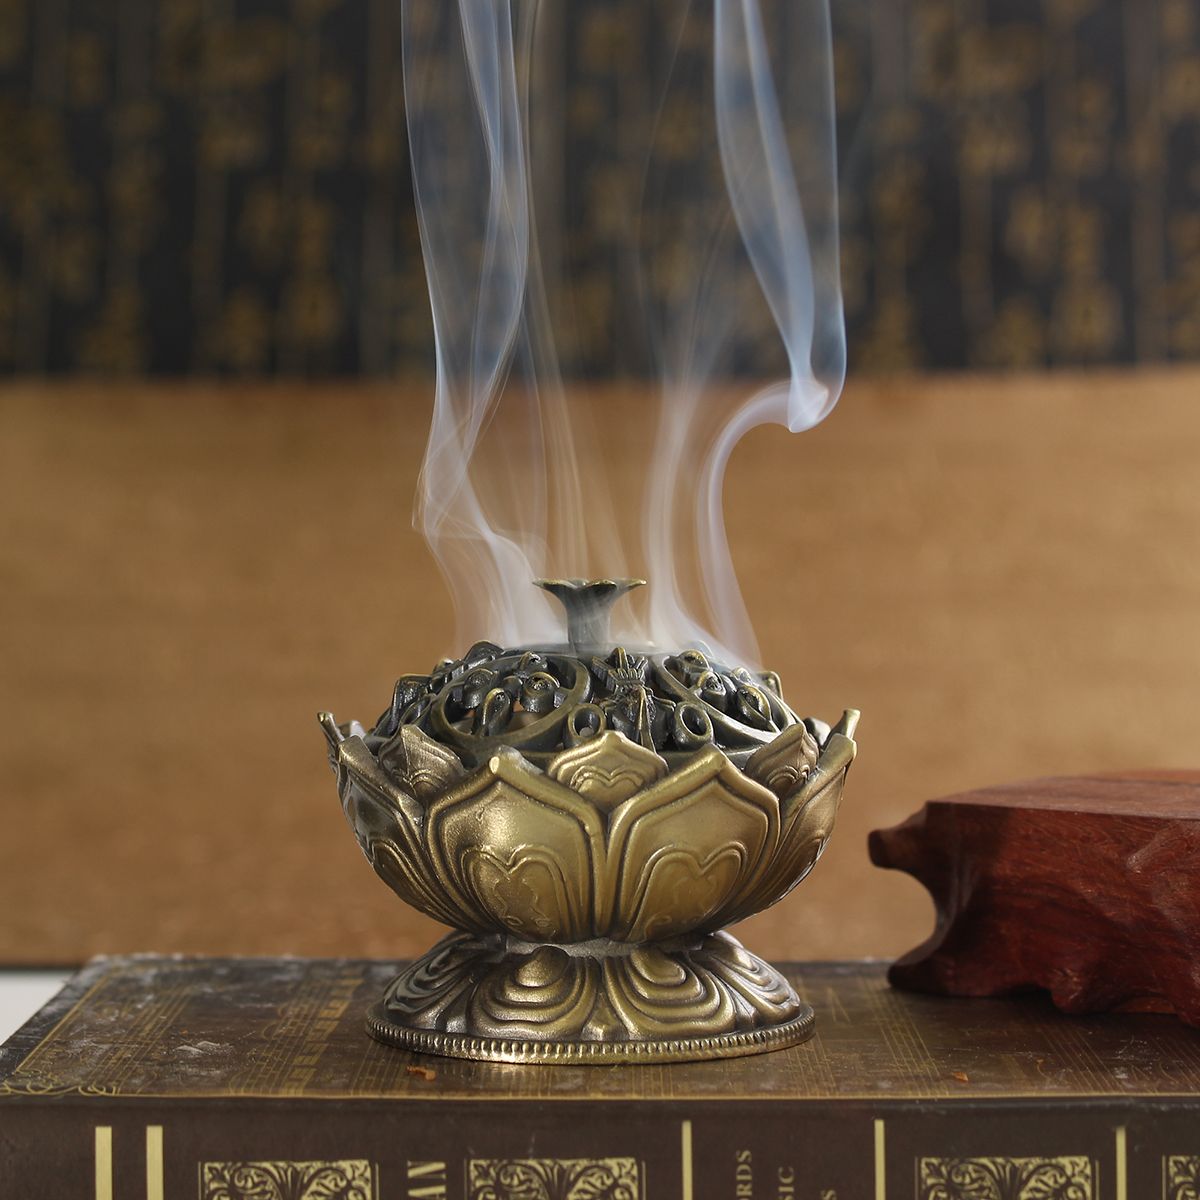 Lotus-Cone-Incense-Burner-Holder-Flower-Statue-Censer-Chinese-Style-Buddhist-Meditation-Home-Decor-1304472